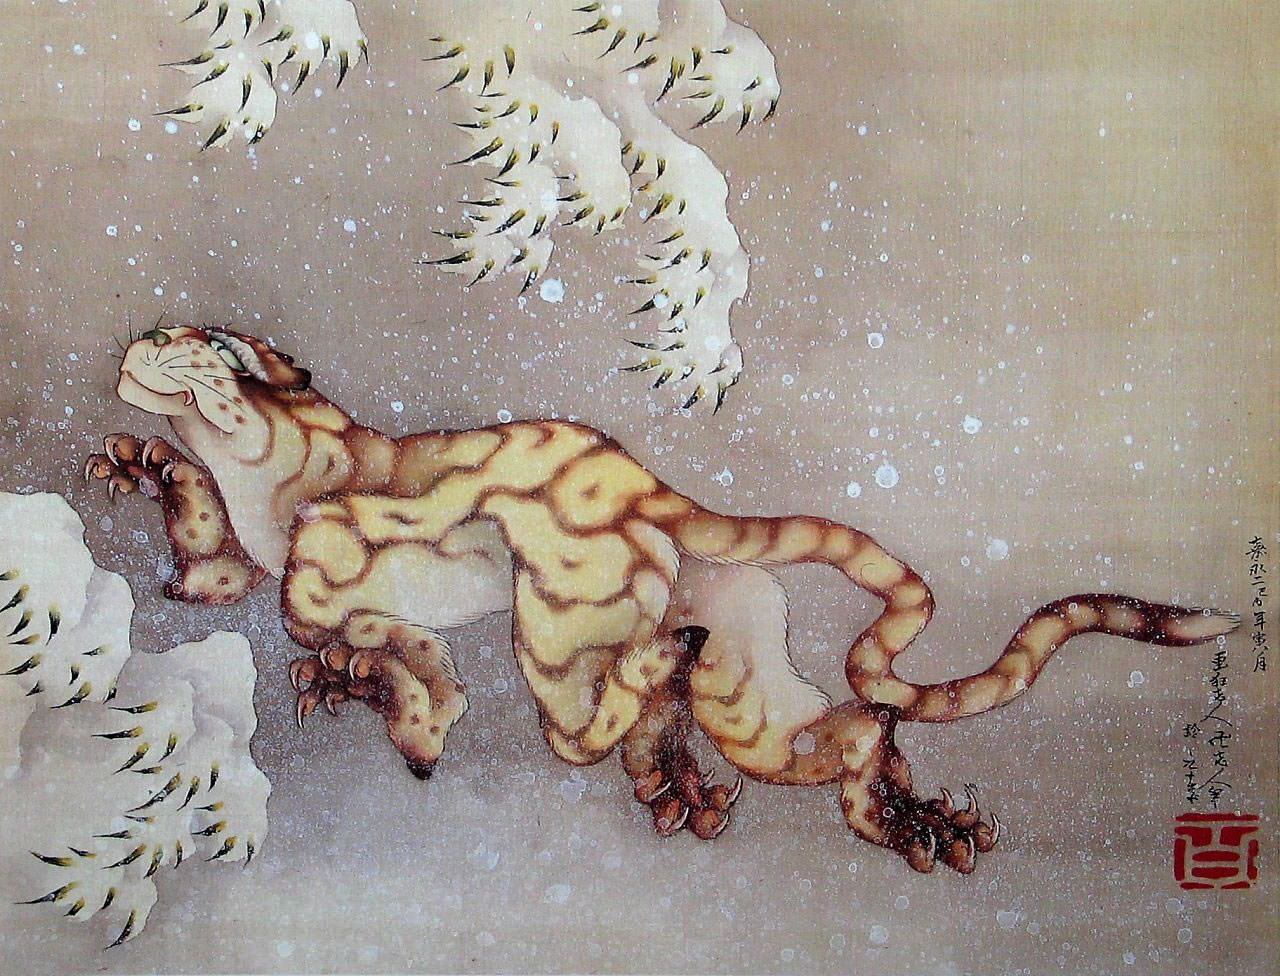 雪中虎 by Katsushika Hokusai - 1849 